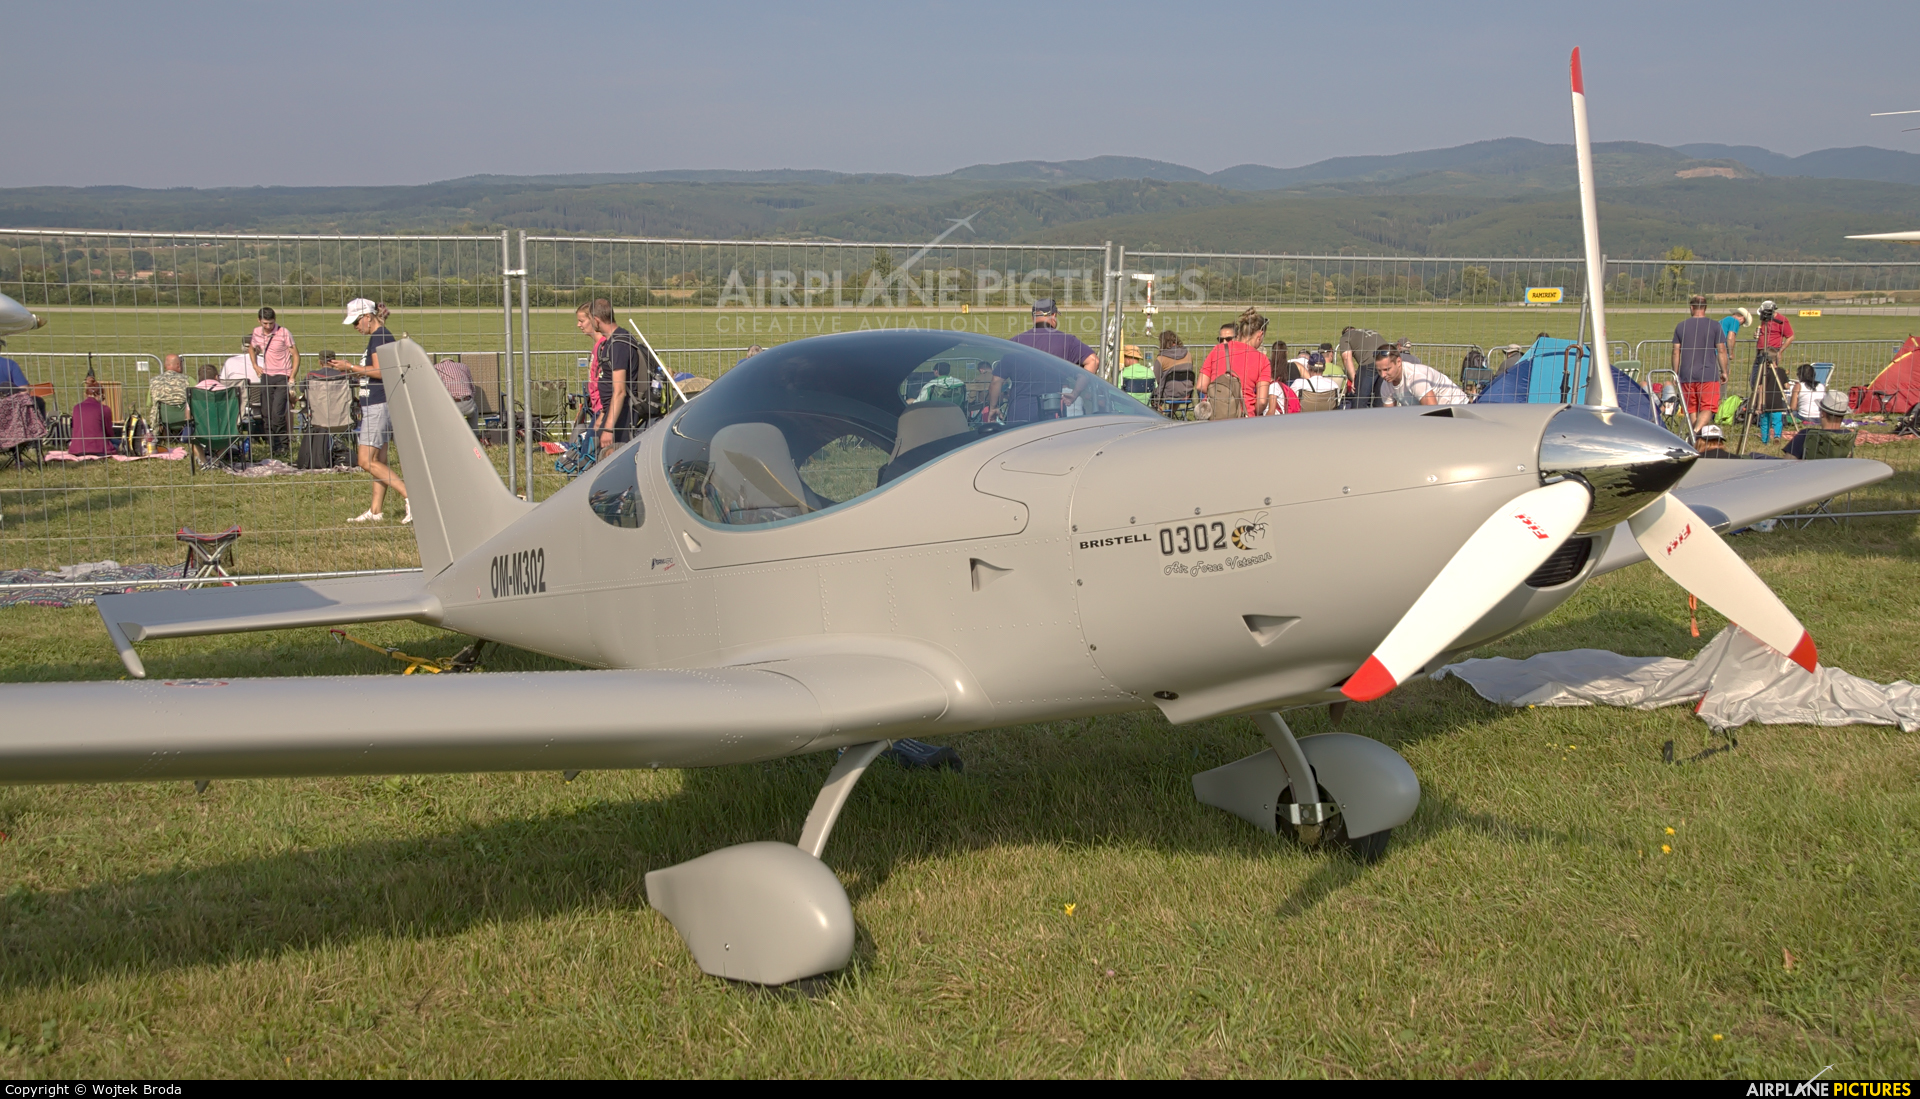 Letecky Sportovy Klub Zvolen OM-M302 aircraft at Sliač